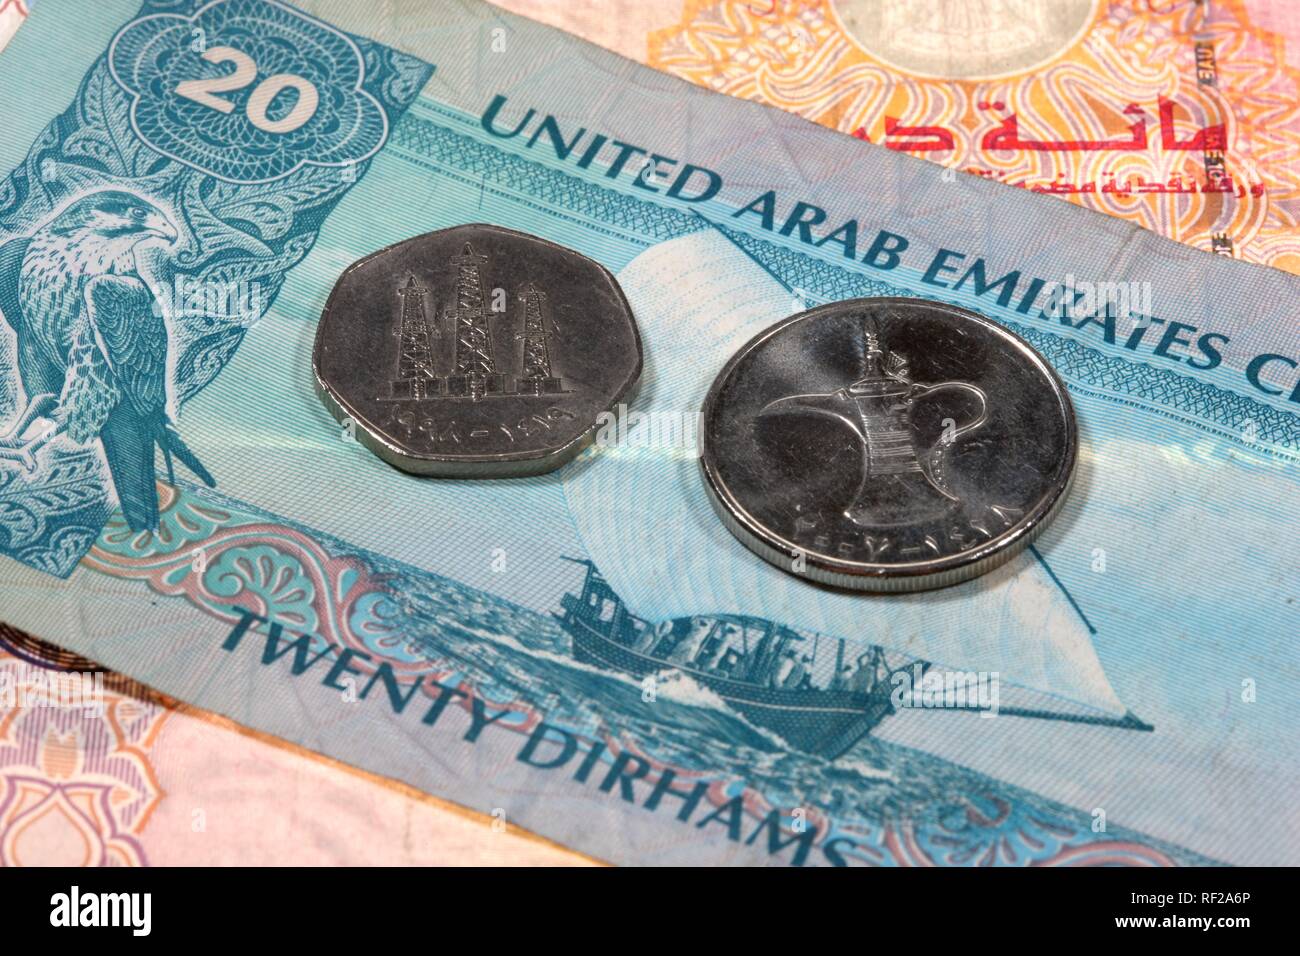 Dirham (or Dirhem) currency, AED, bills and coins featuring oil rig, oil derrick, United Arab Emirates (UAE) Stock Photo